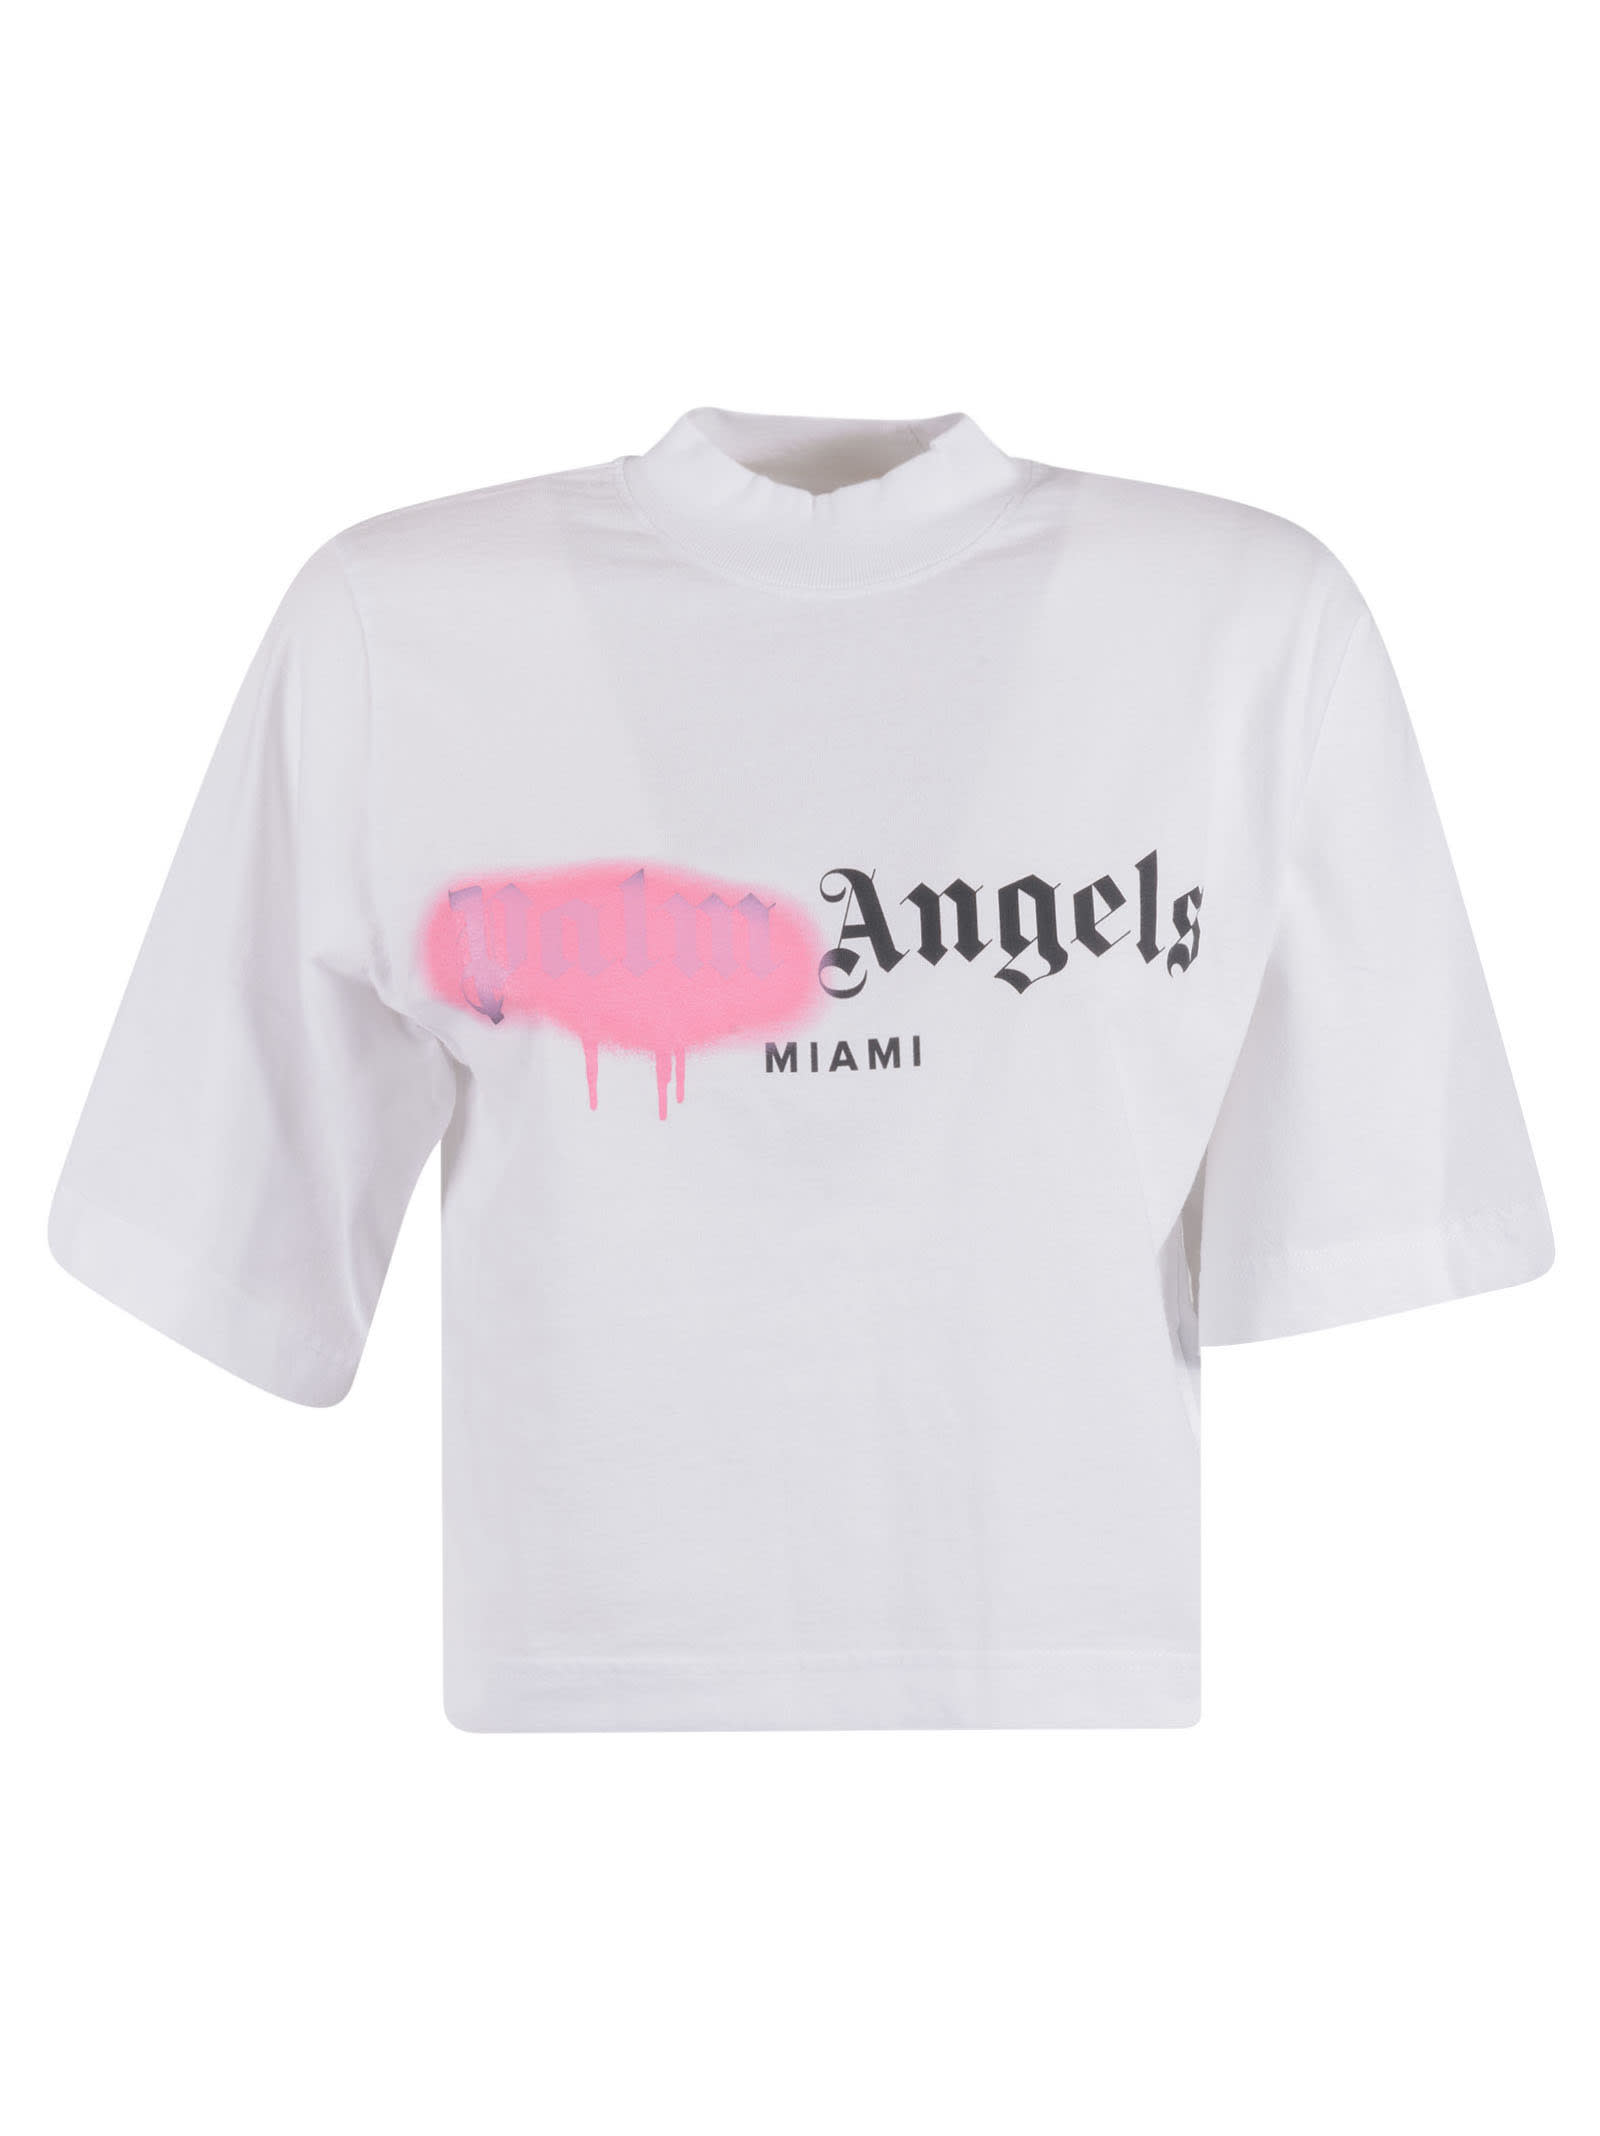 Palm Angels Miami Sprayed Logo T-shirt In White/pink | ModeSens